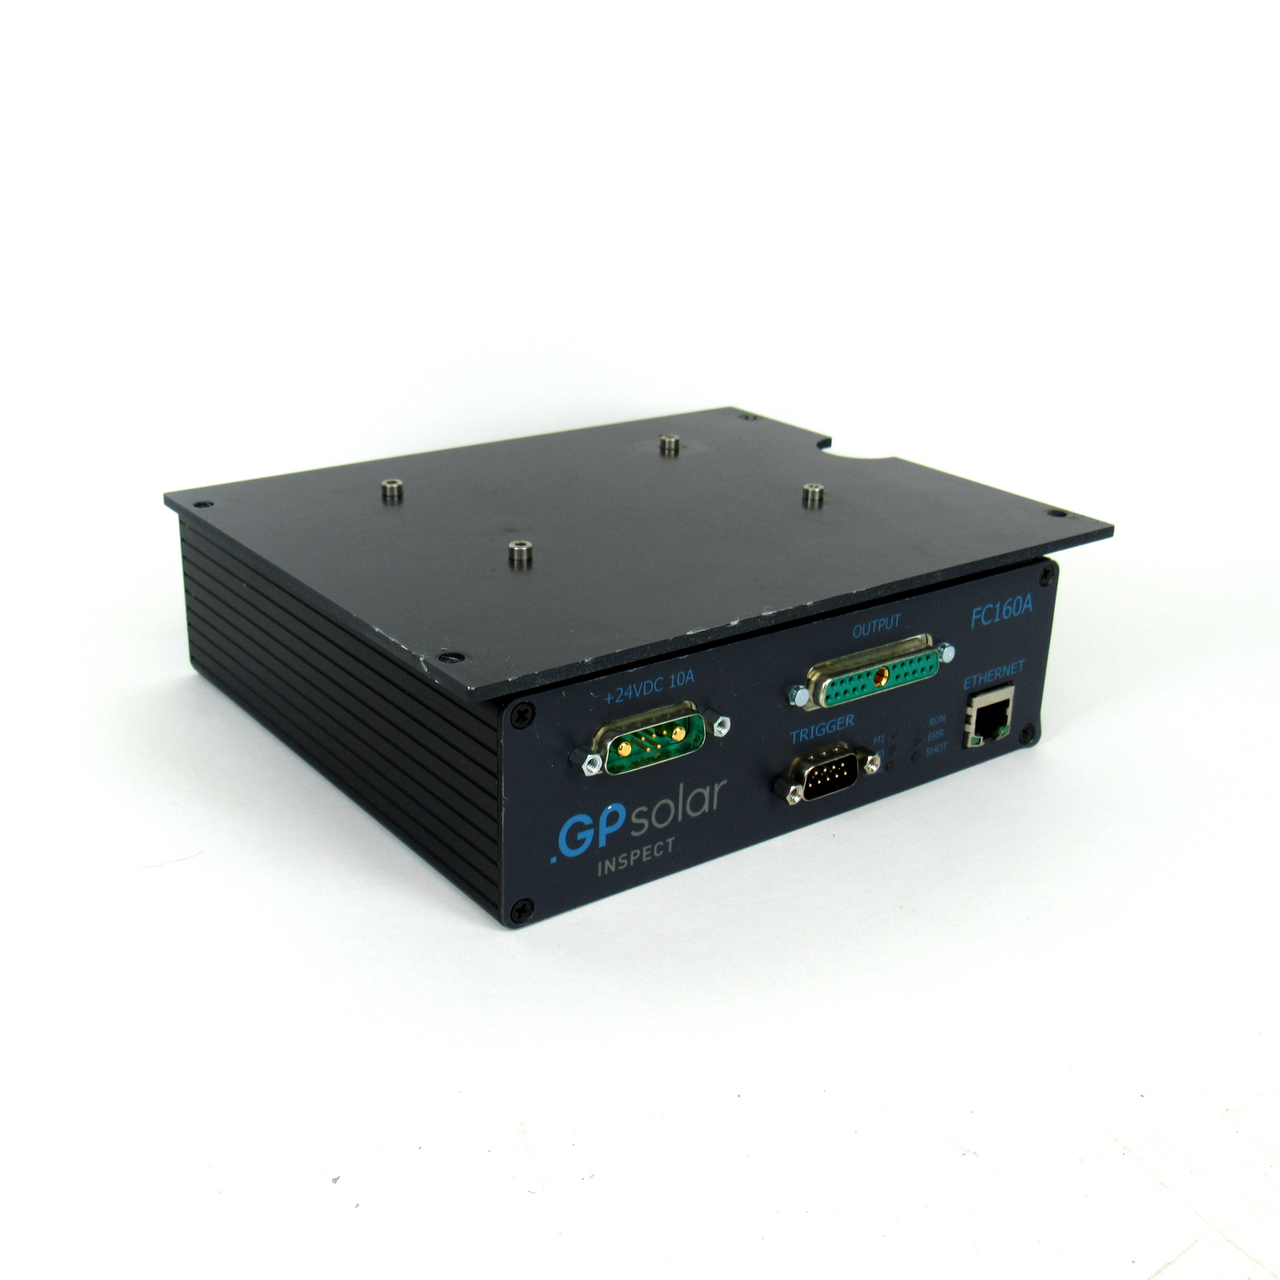 GP Solar FC160A Inspect for Inspection Camera, 24V DC